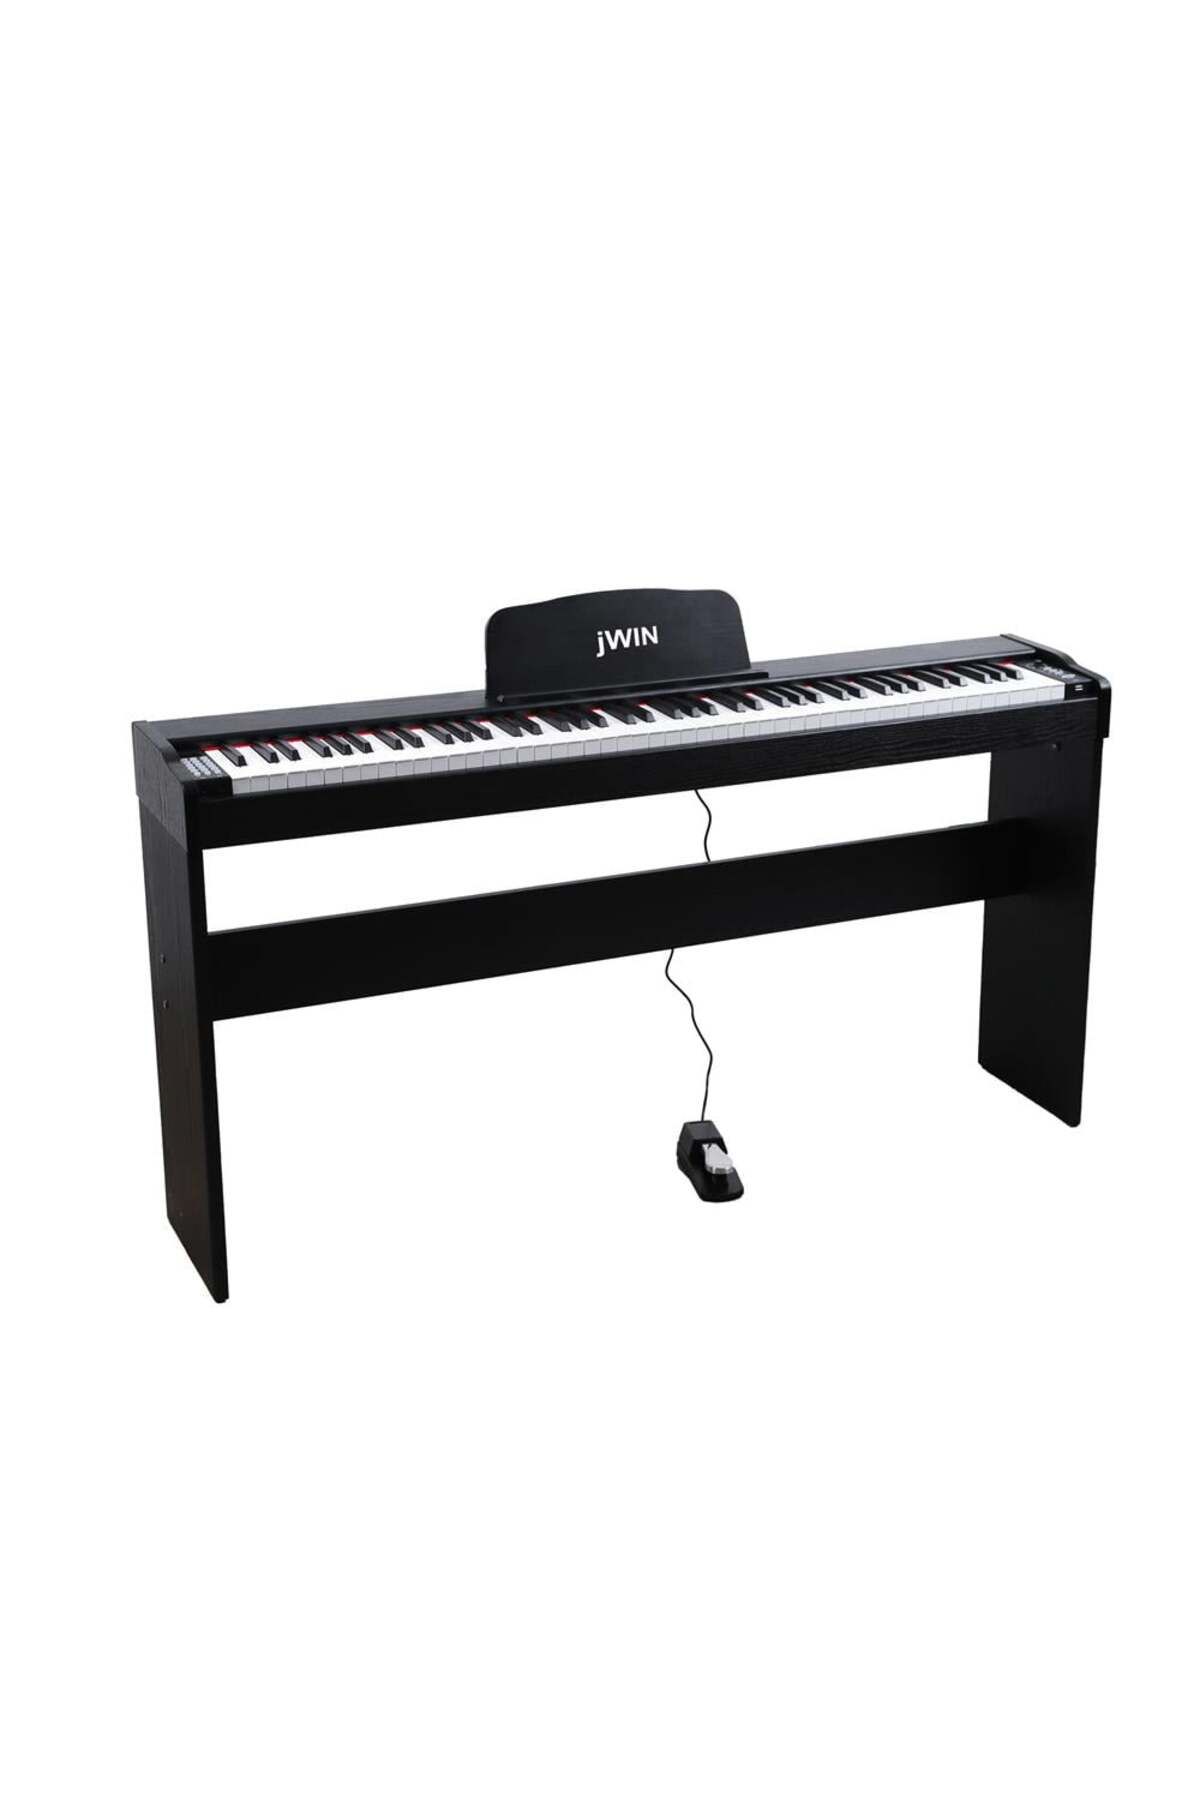 JWIN Sdp-90 Tuş Hassasiyetli 88 Tuşlu Dijital Piyano